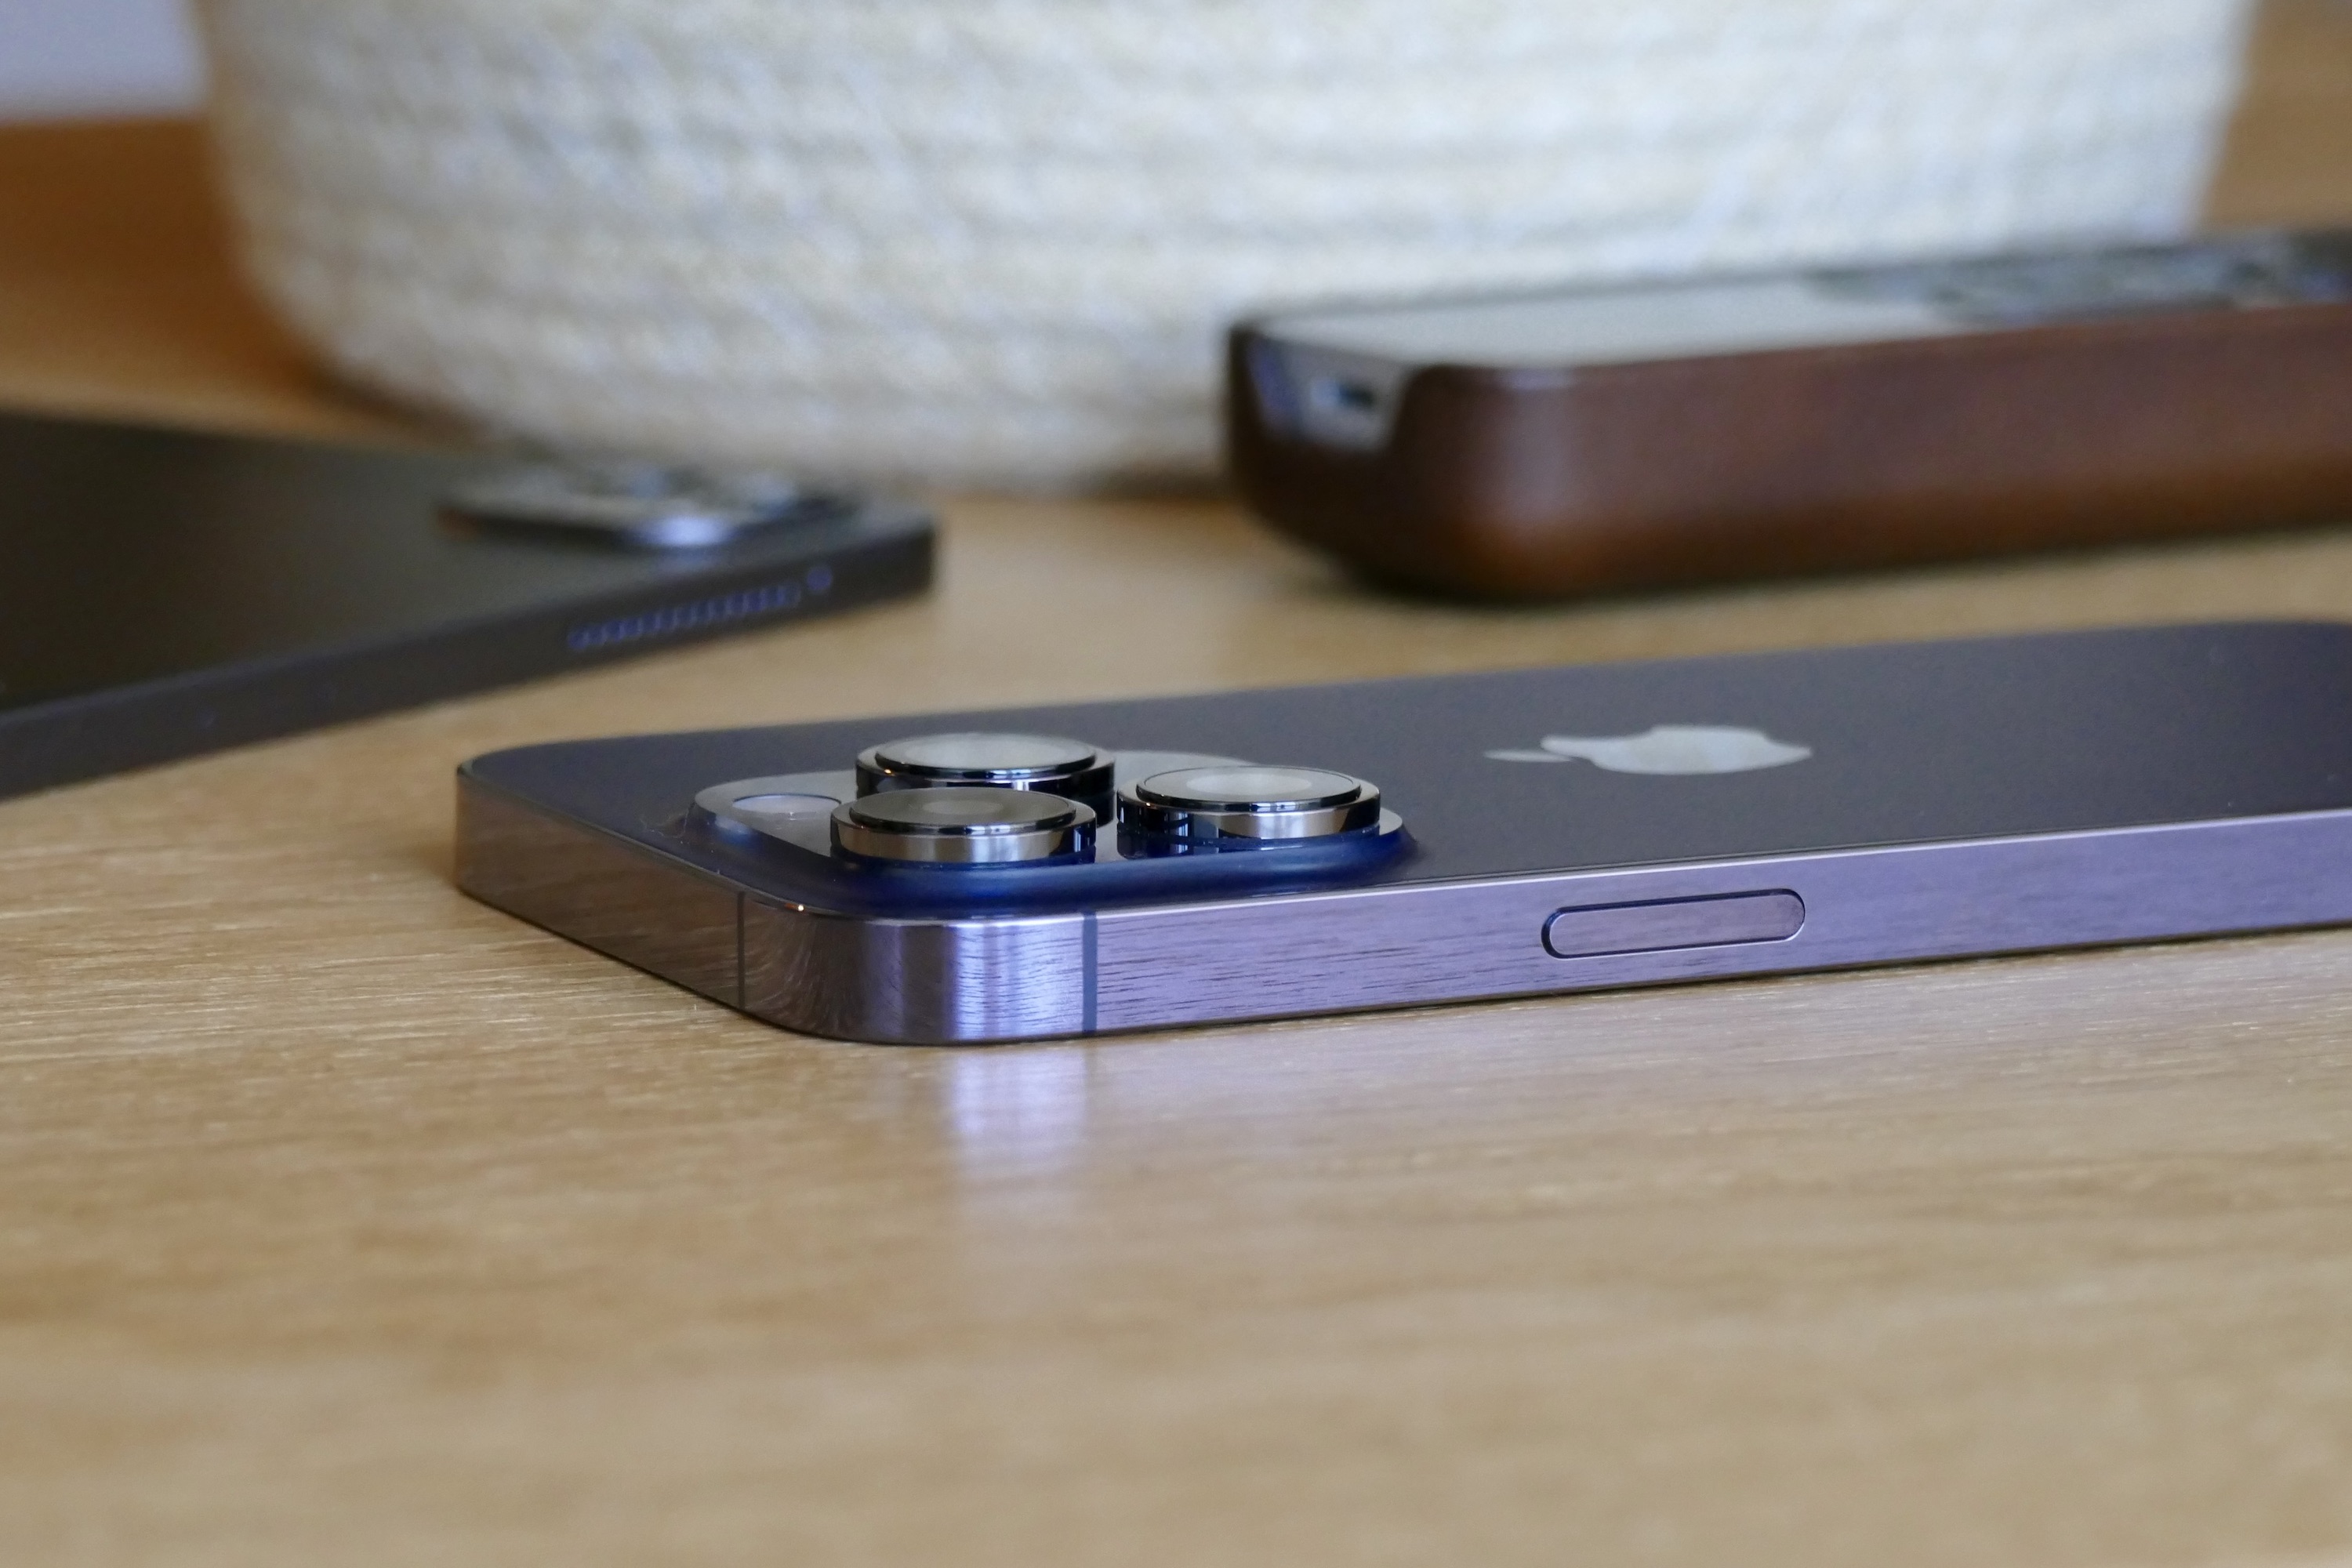 iPhone 14 Pro camera module.